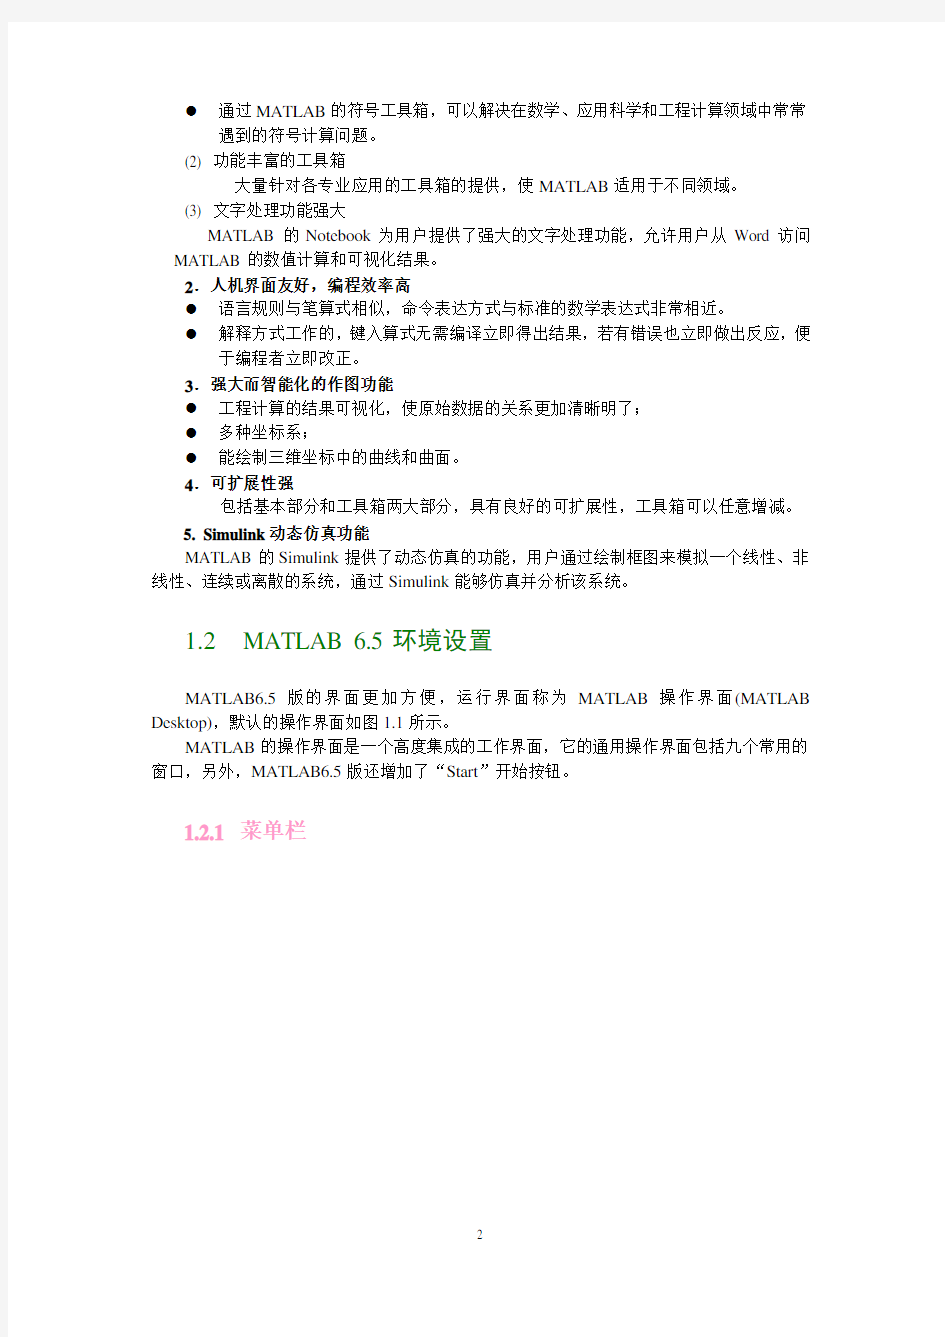 MATLAB 中文手册 中文自带说明